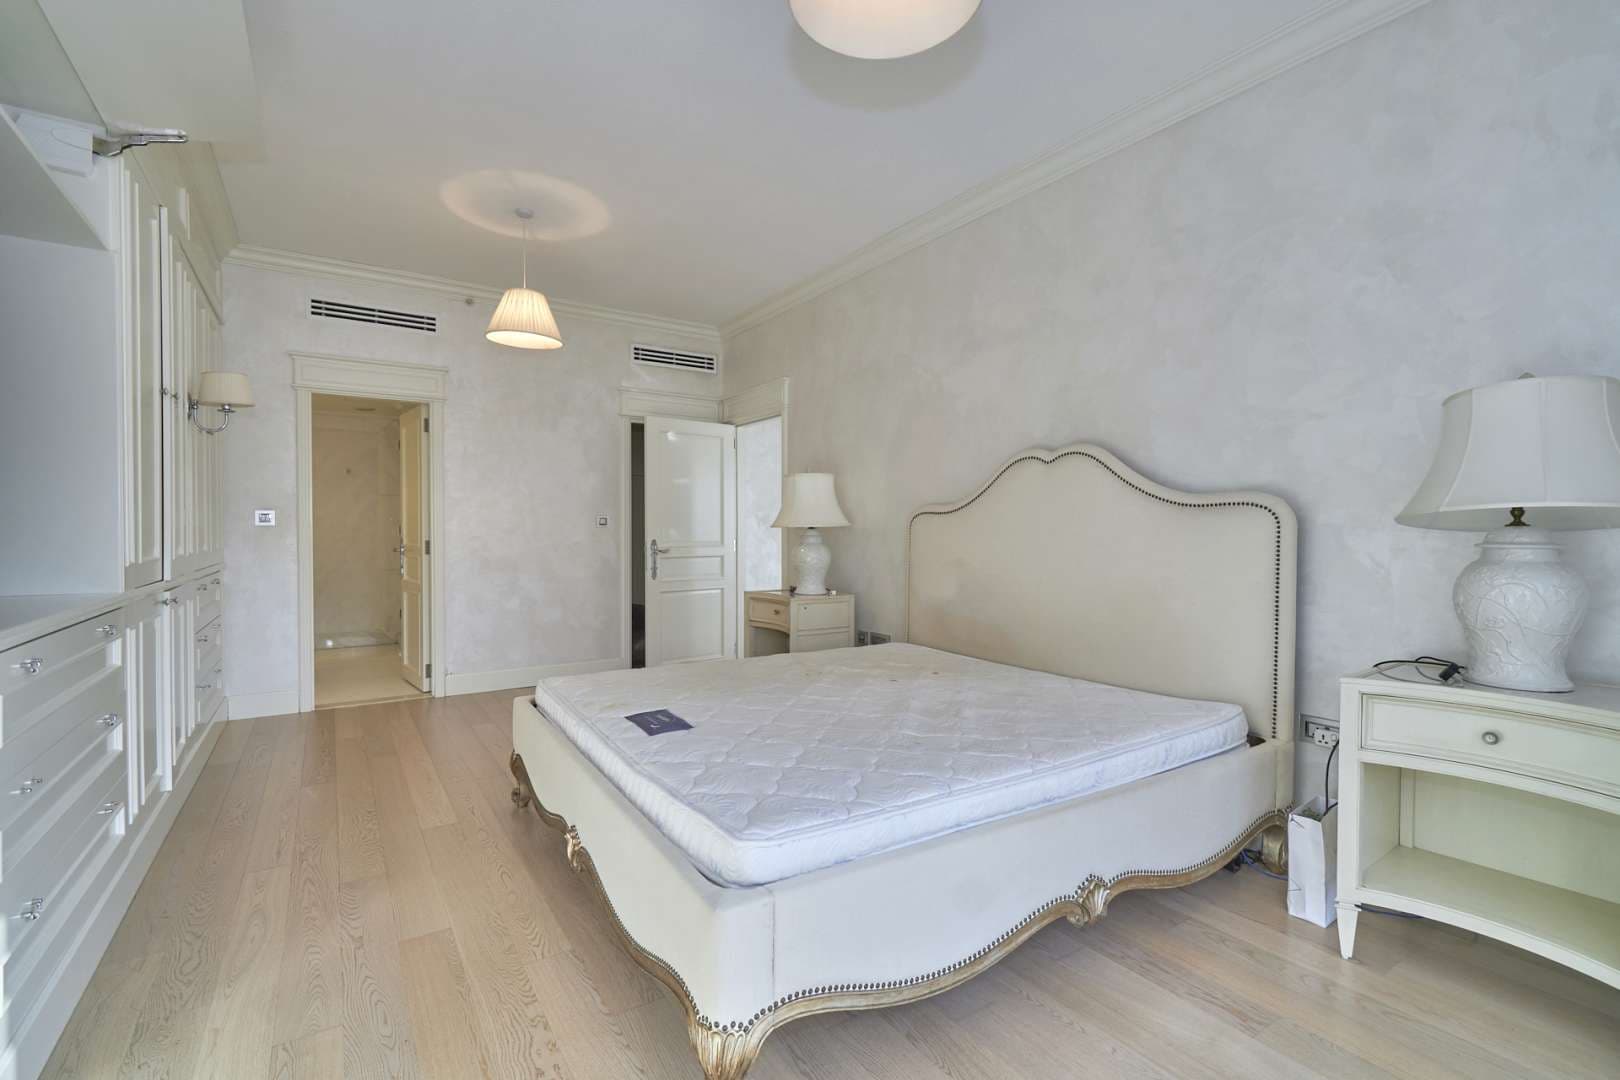 2 Bedroom Apartment For Rent South Ridge Lp08449 29b0a96a7cd02200.jpg